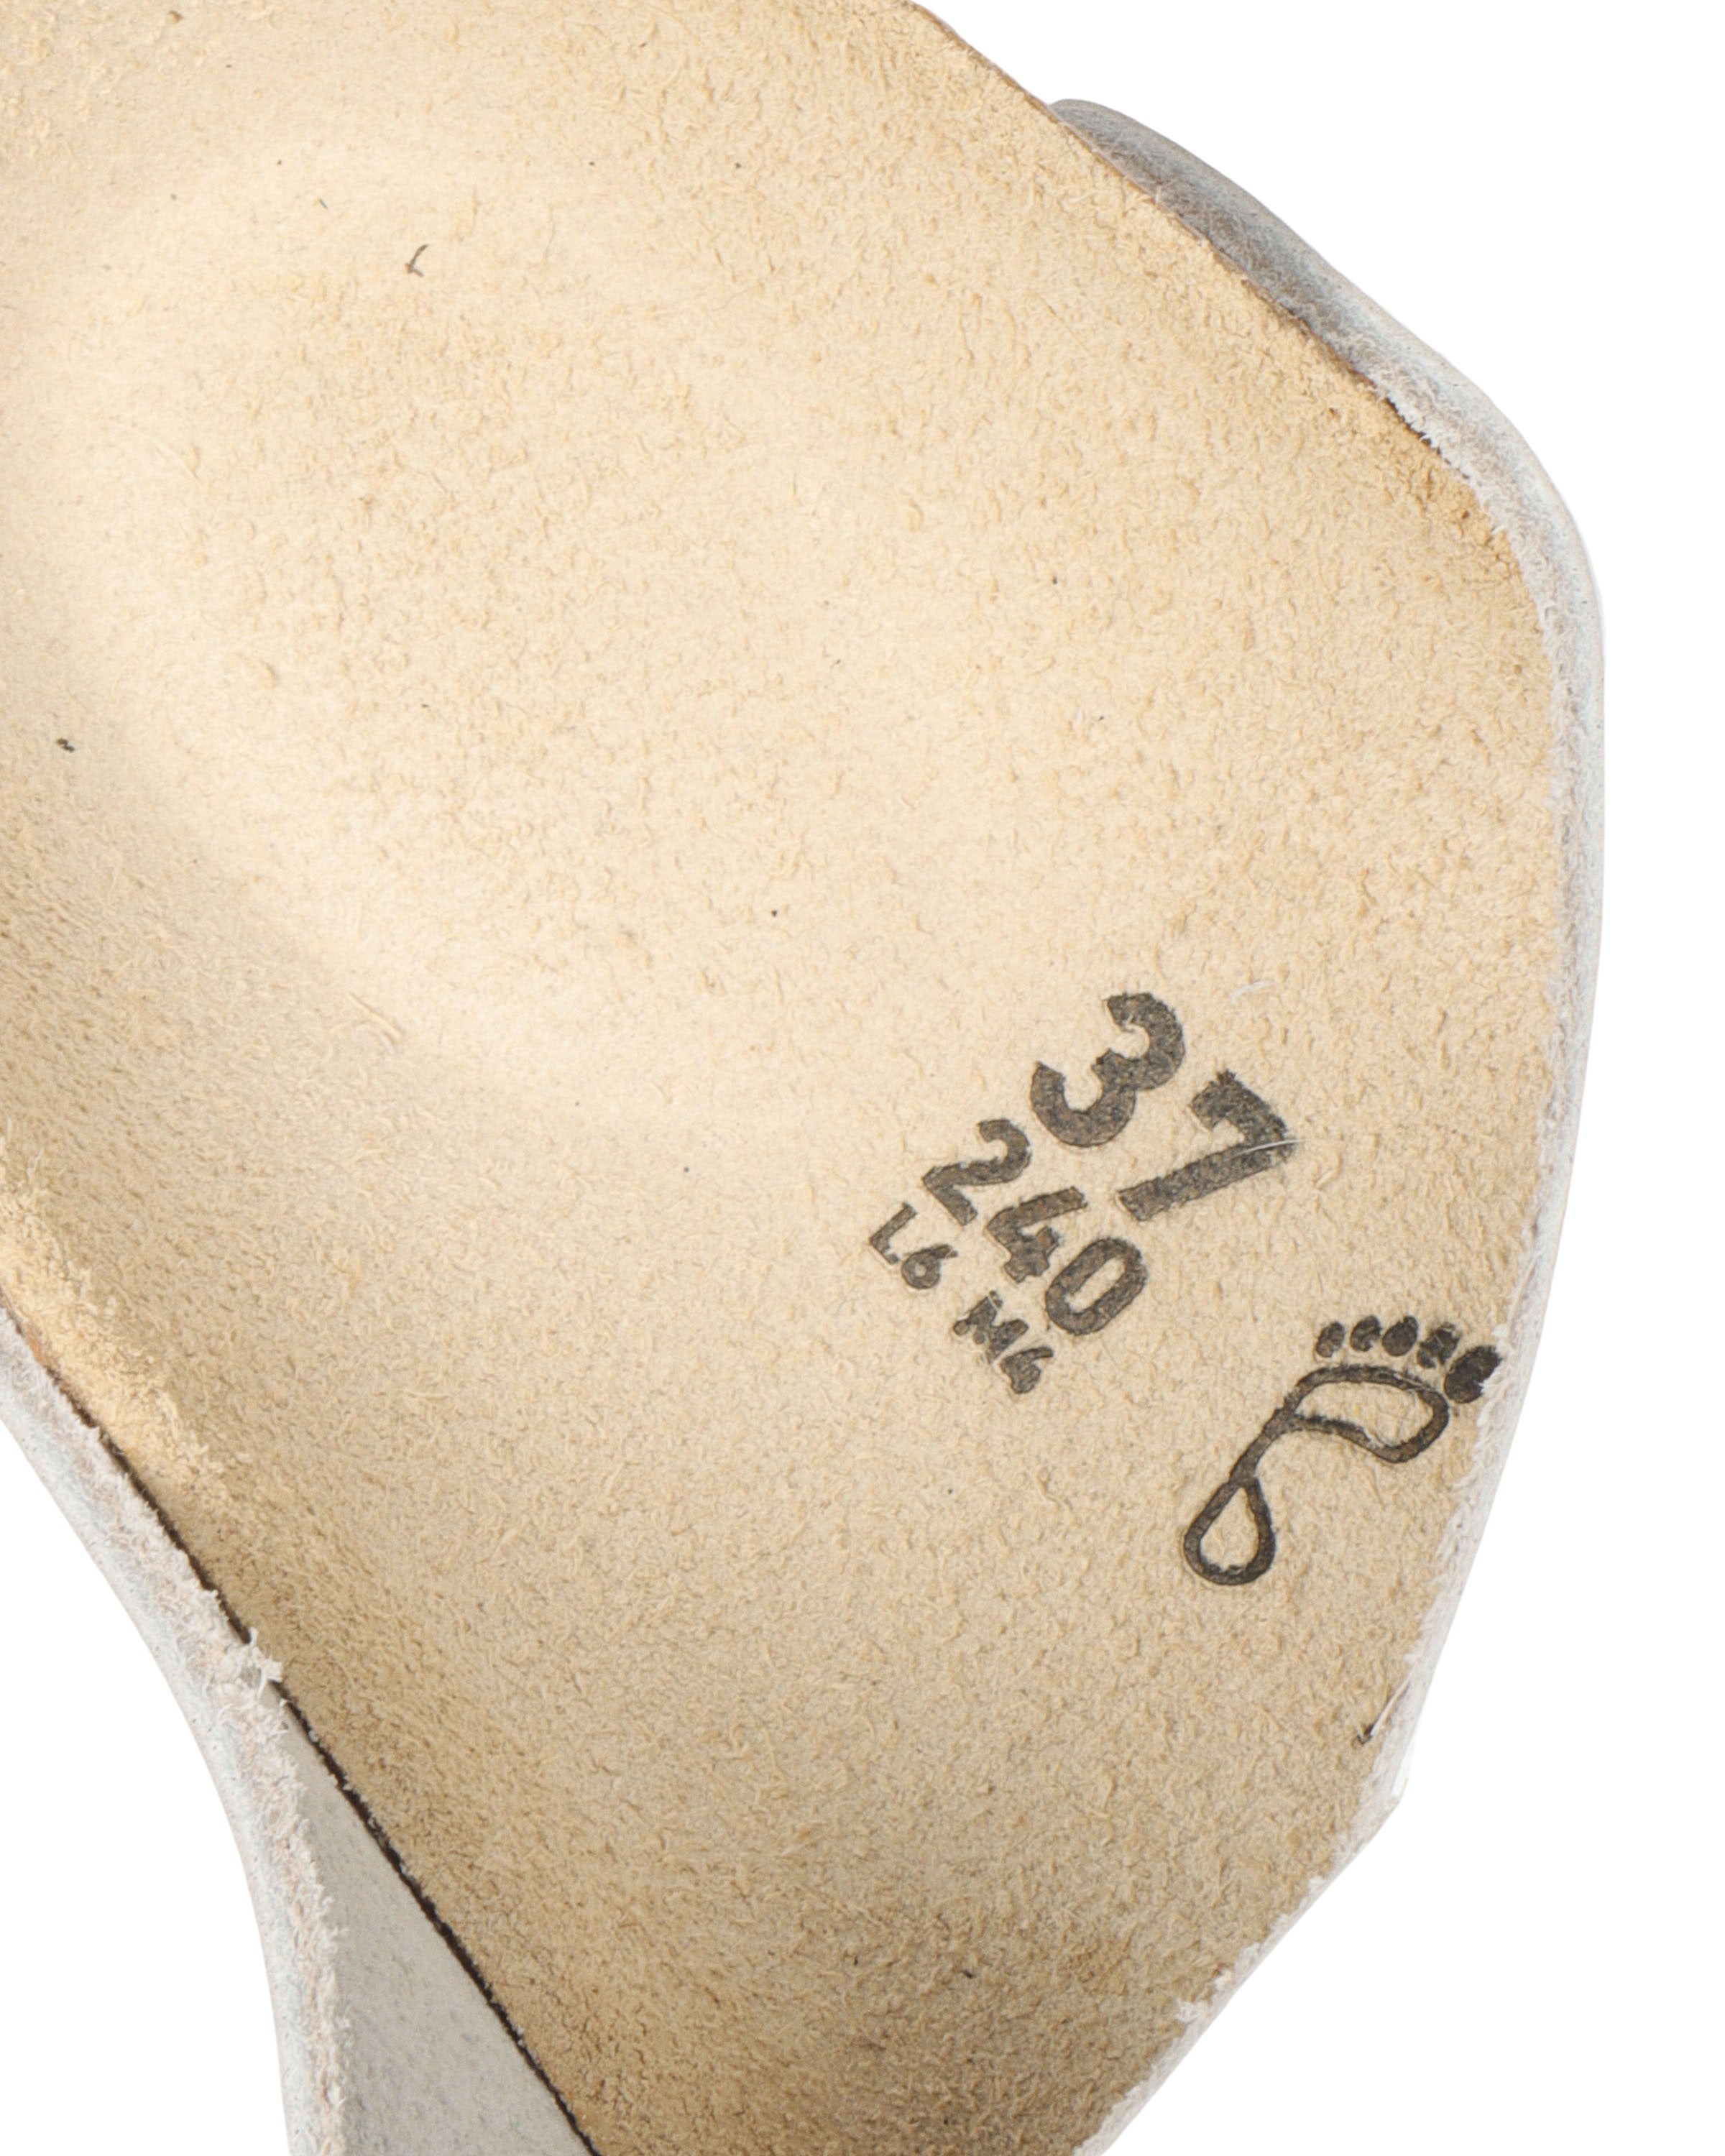 Birkenstock Arizona Leather Sandals